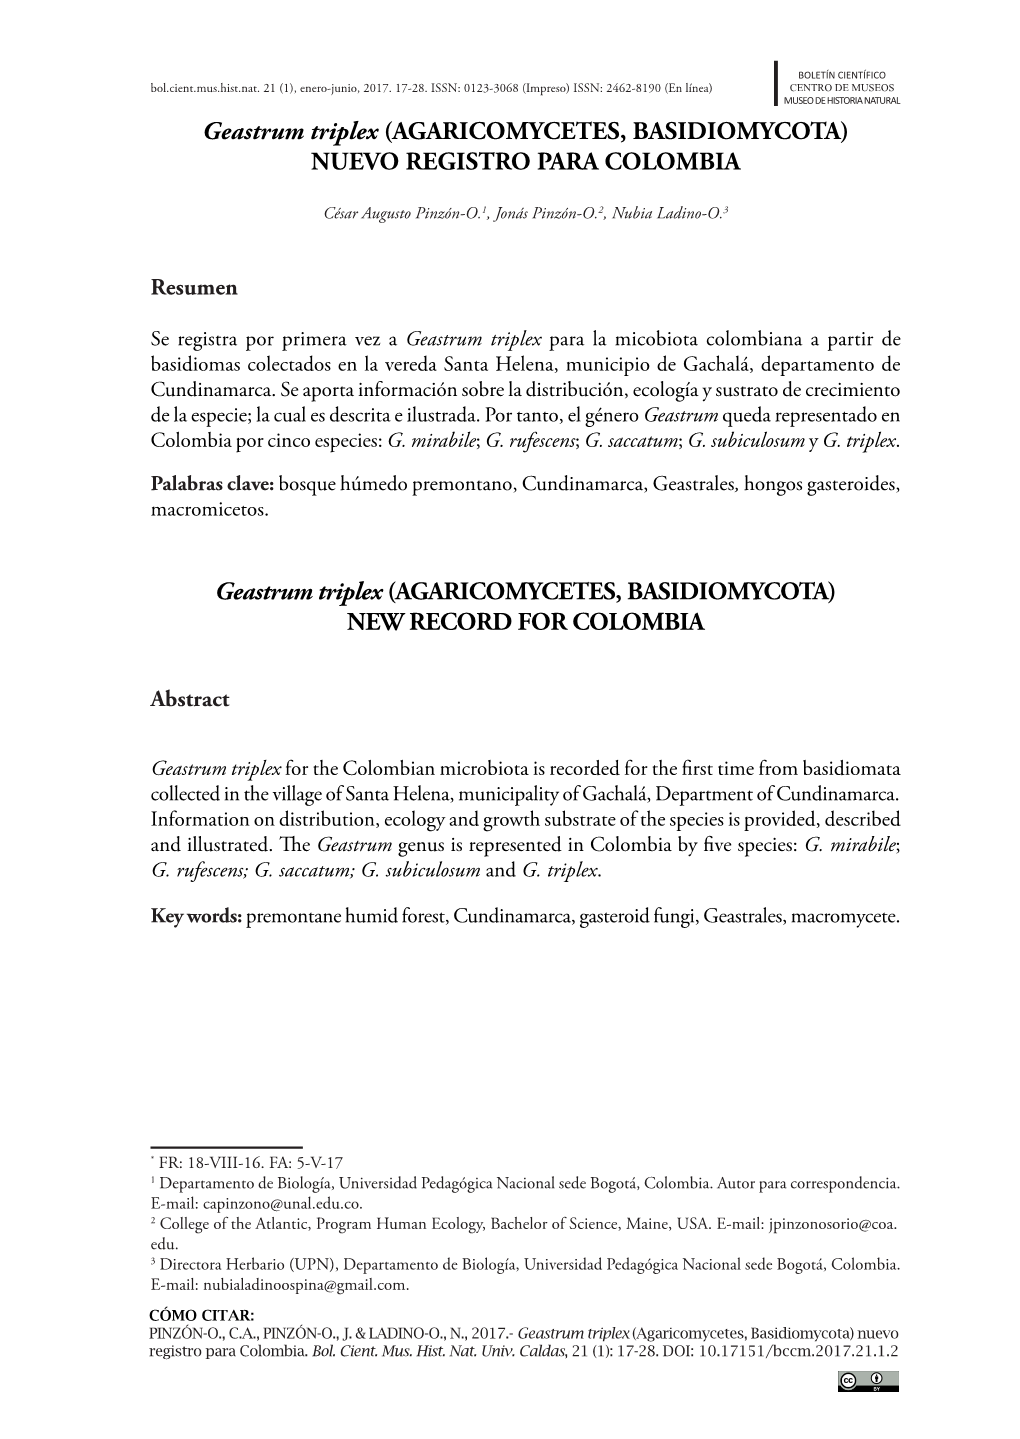 Geastrum Triplex (AGARICOMYCETES, BASIDIOMYCOTA) NUEVO REGISTRO PARA COLOMBIA